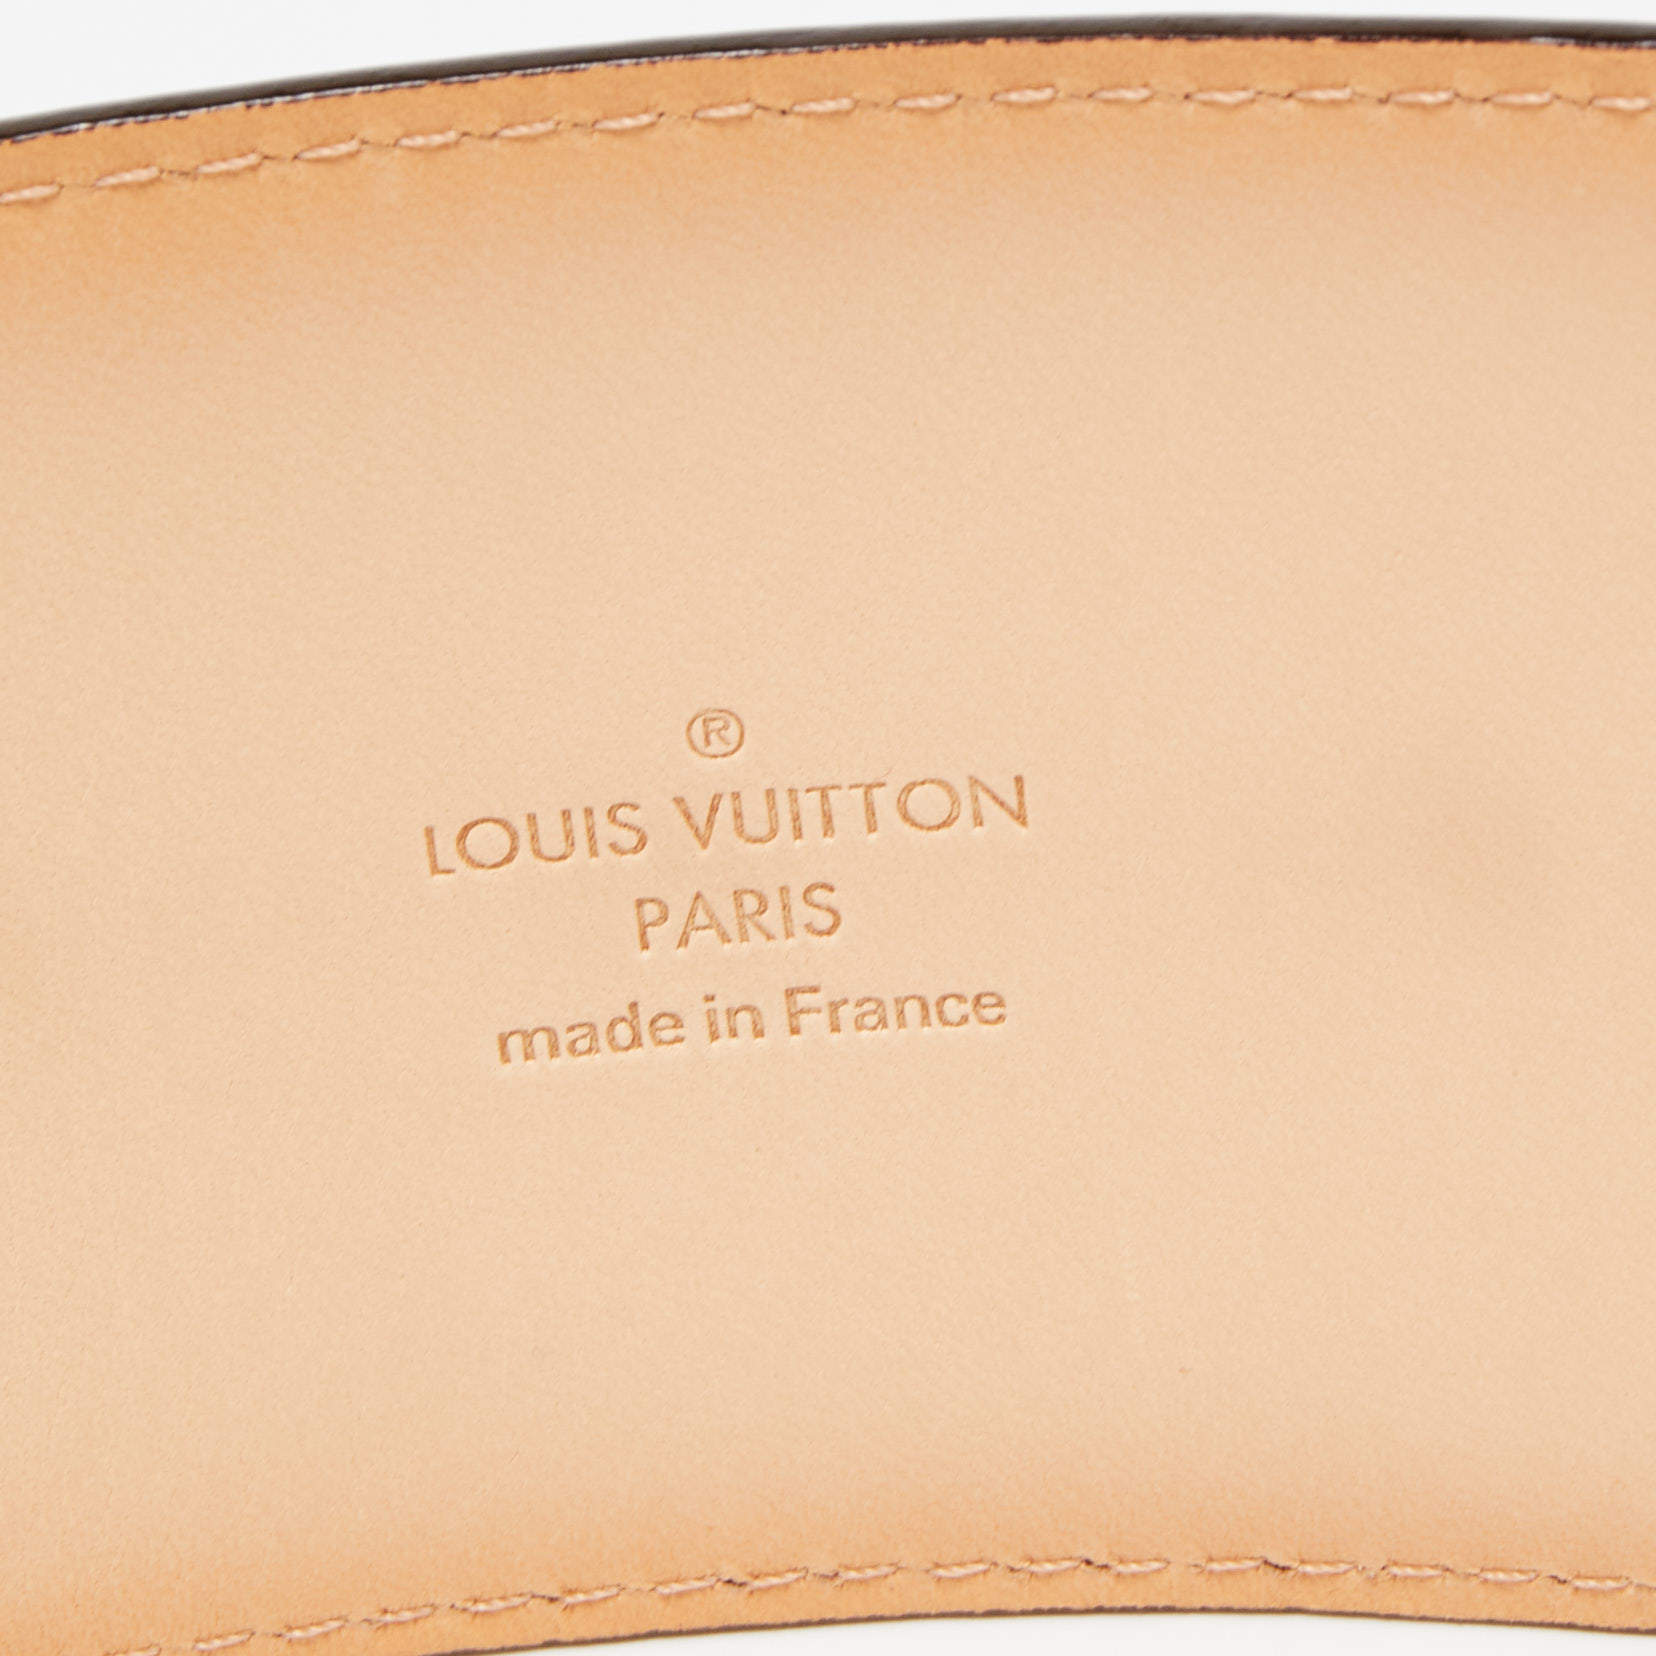 Louis Vuitton Vernis 70mm Initiales Belt - Belts, Accessories